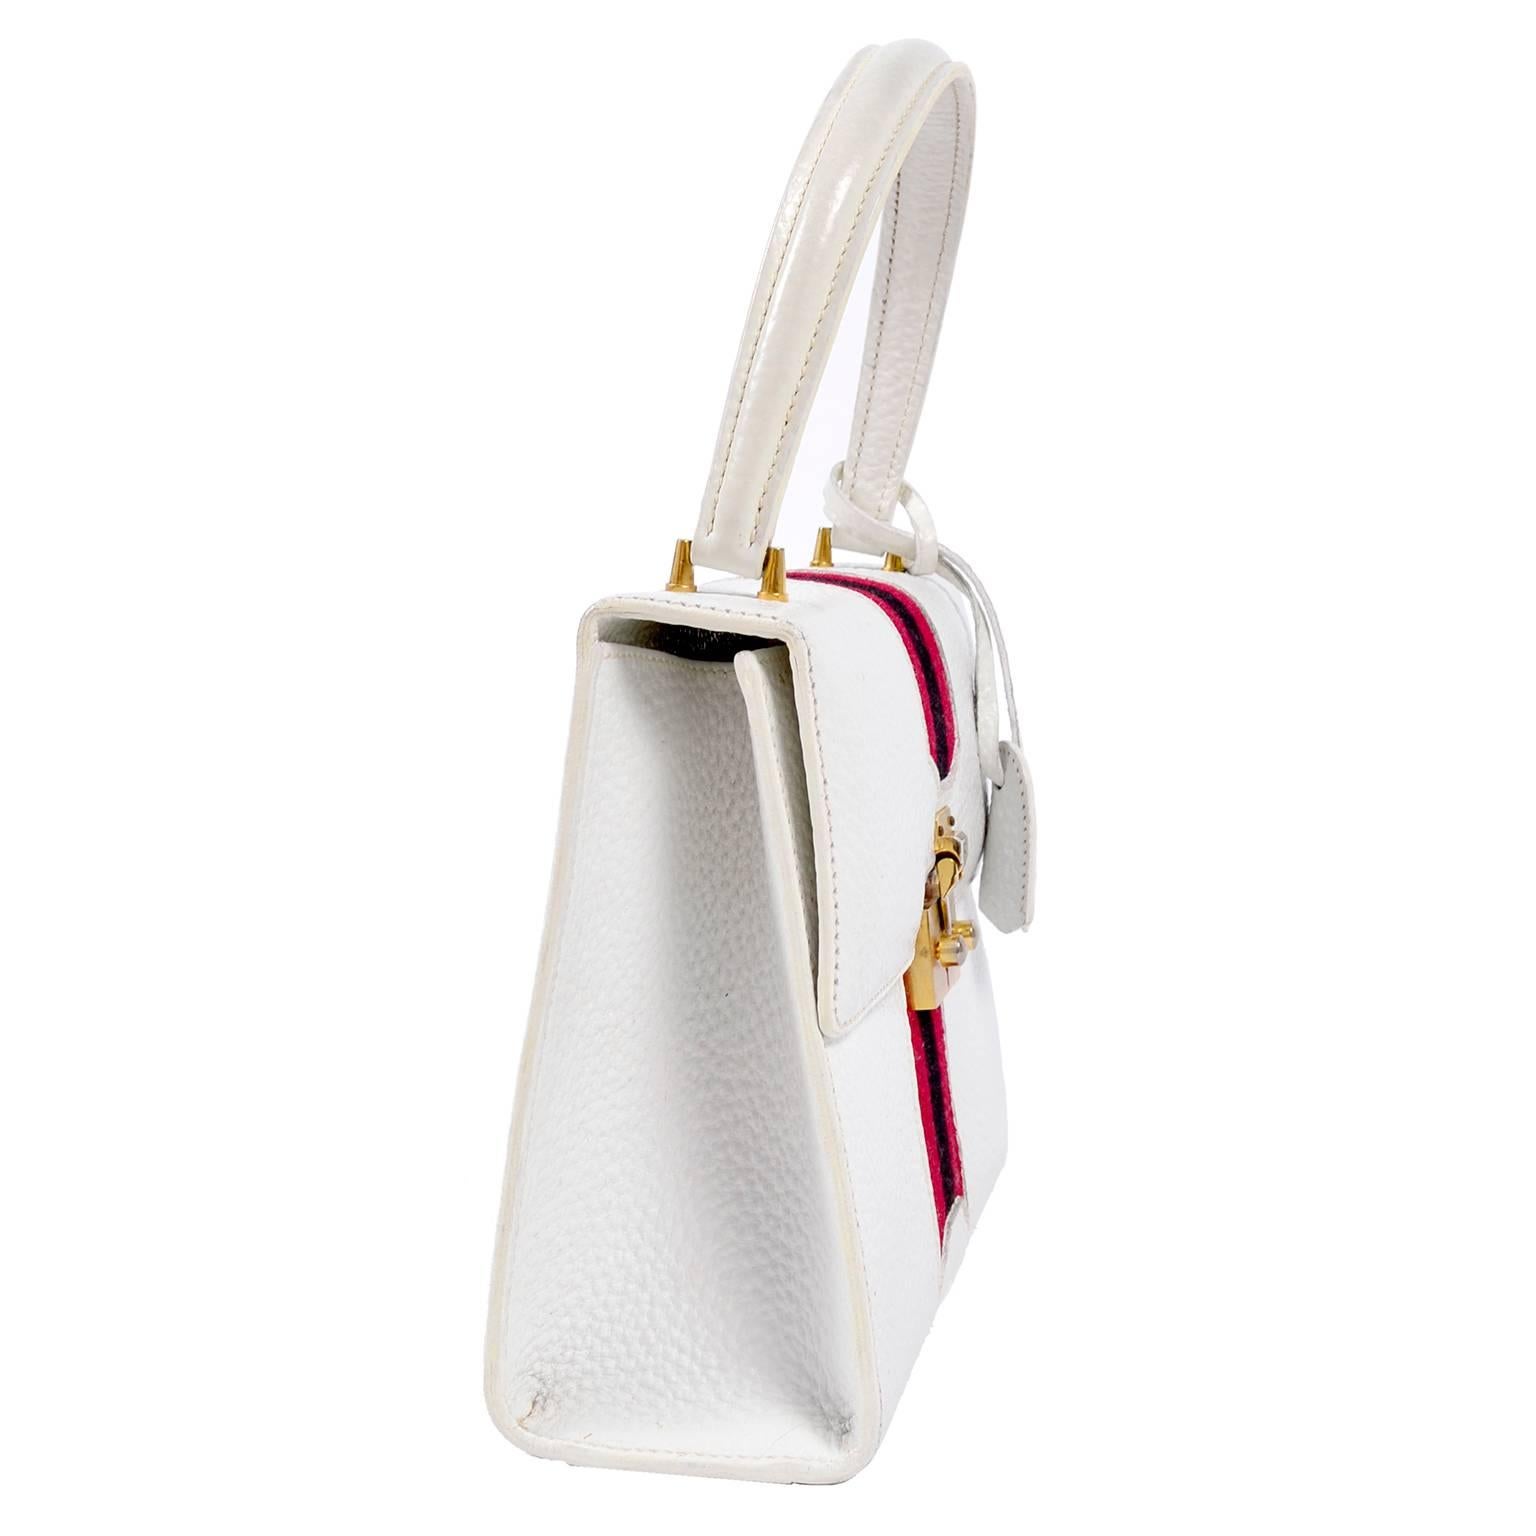 Vintage White Gucci Handbag Satchel in Leather With Stripes & Key Lock 6